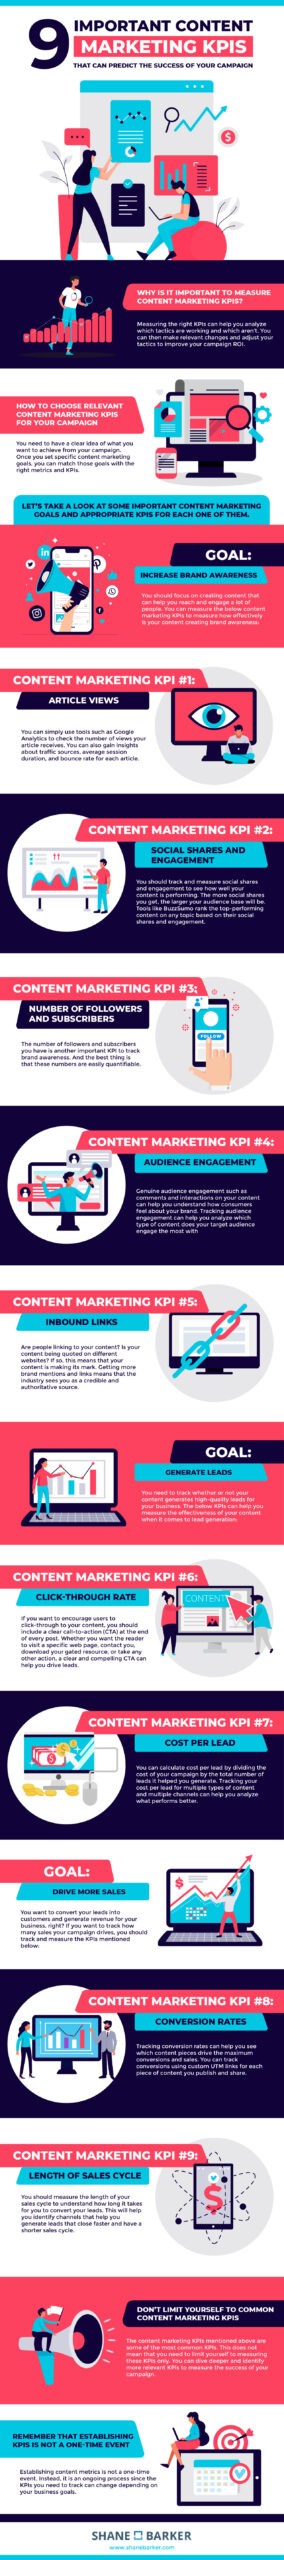 Important content marketing KPIs